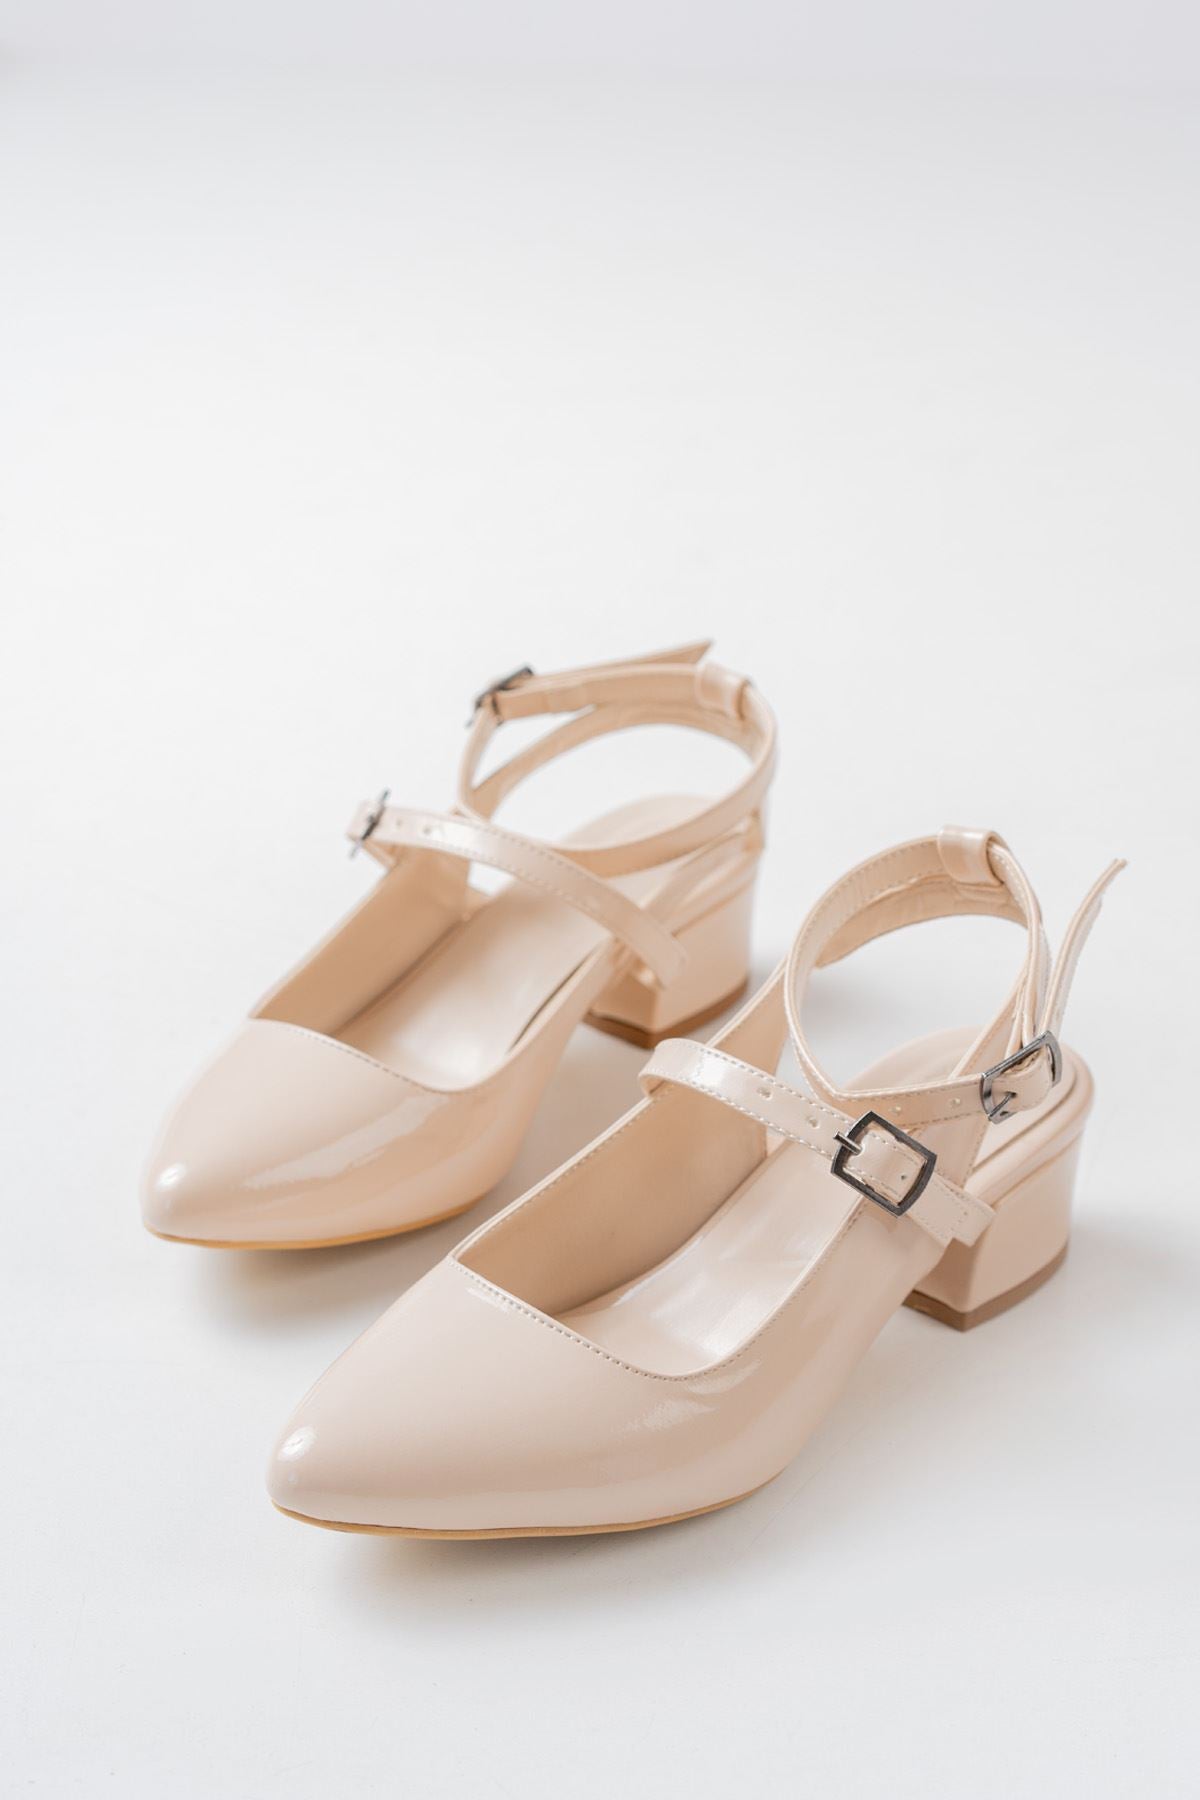 Nita Cream Patent Leather Low Heel Women's Shoes - STREETMODE™